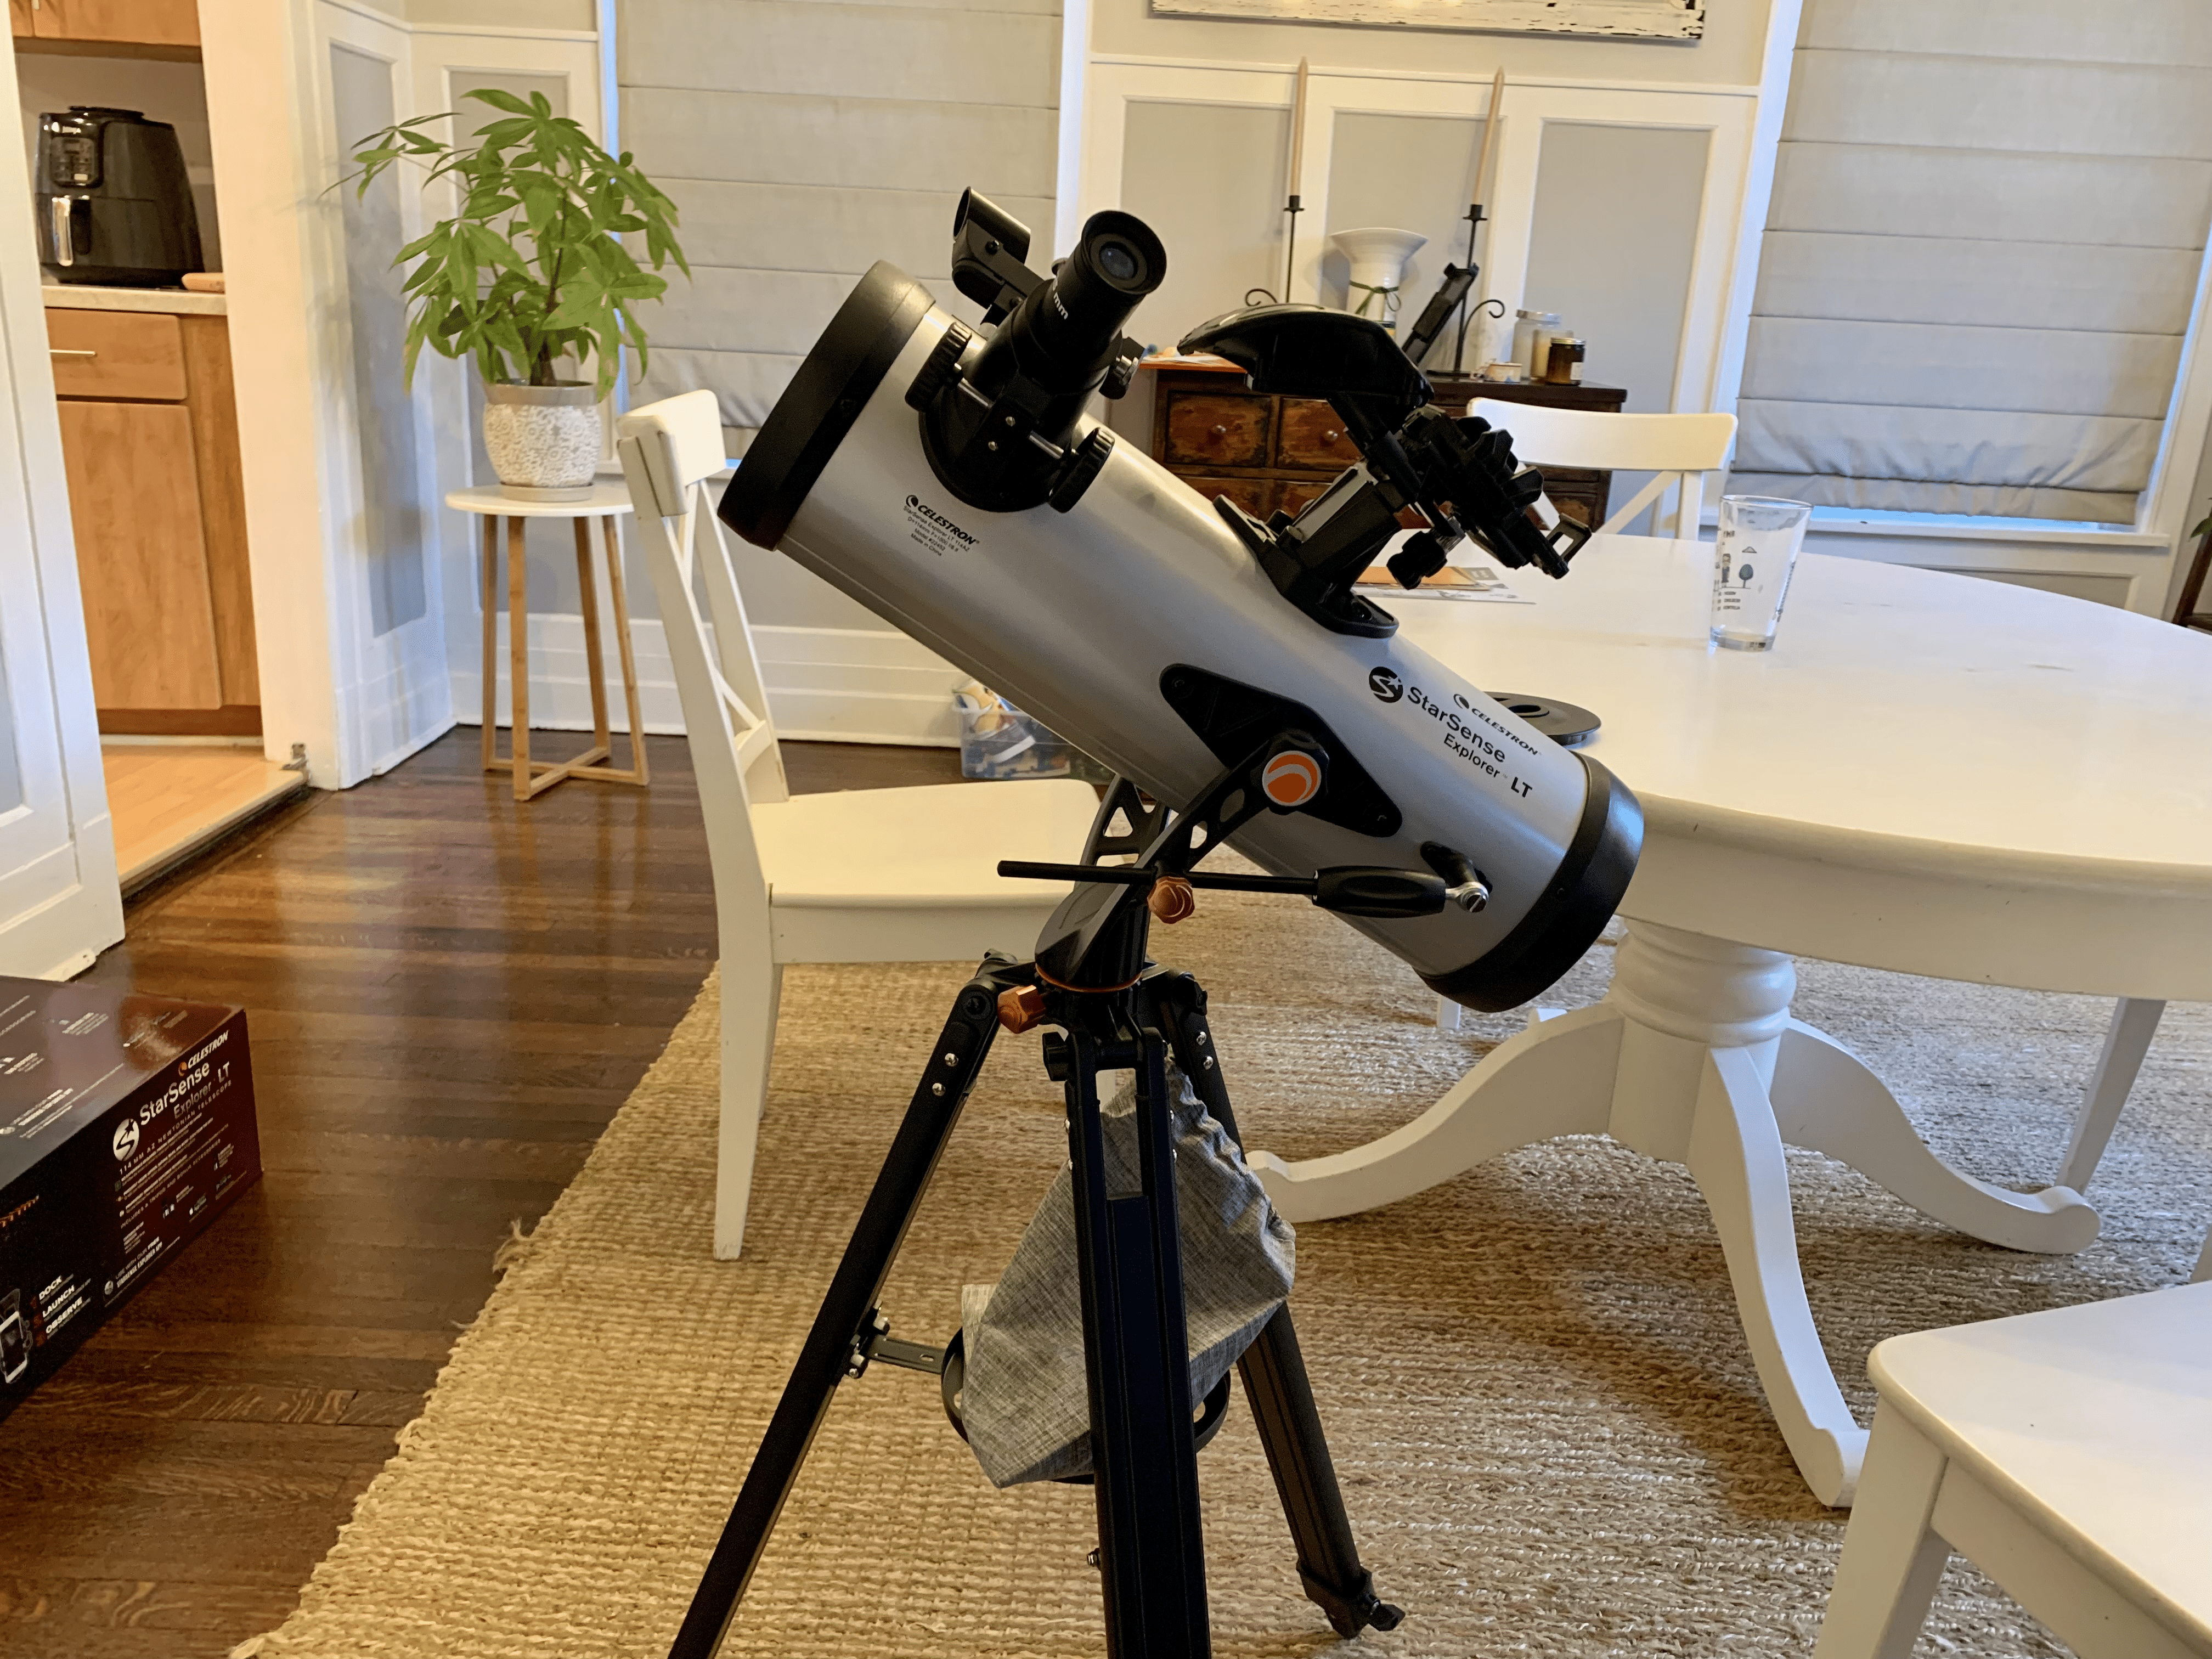 My first telescope purchase, the Celestron Starsense 130 Newtonian.